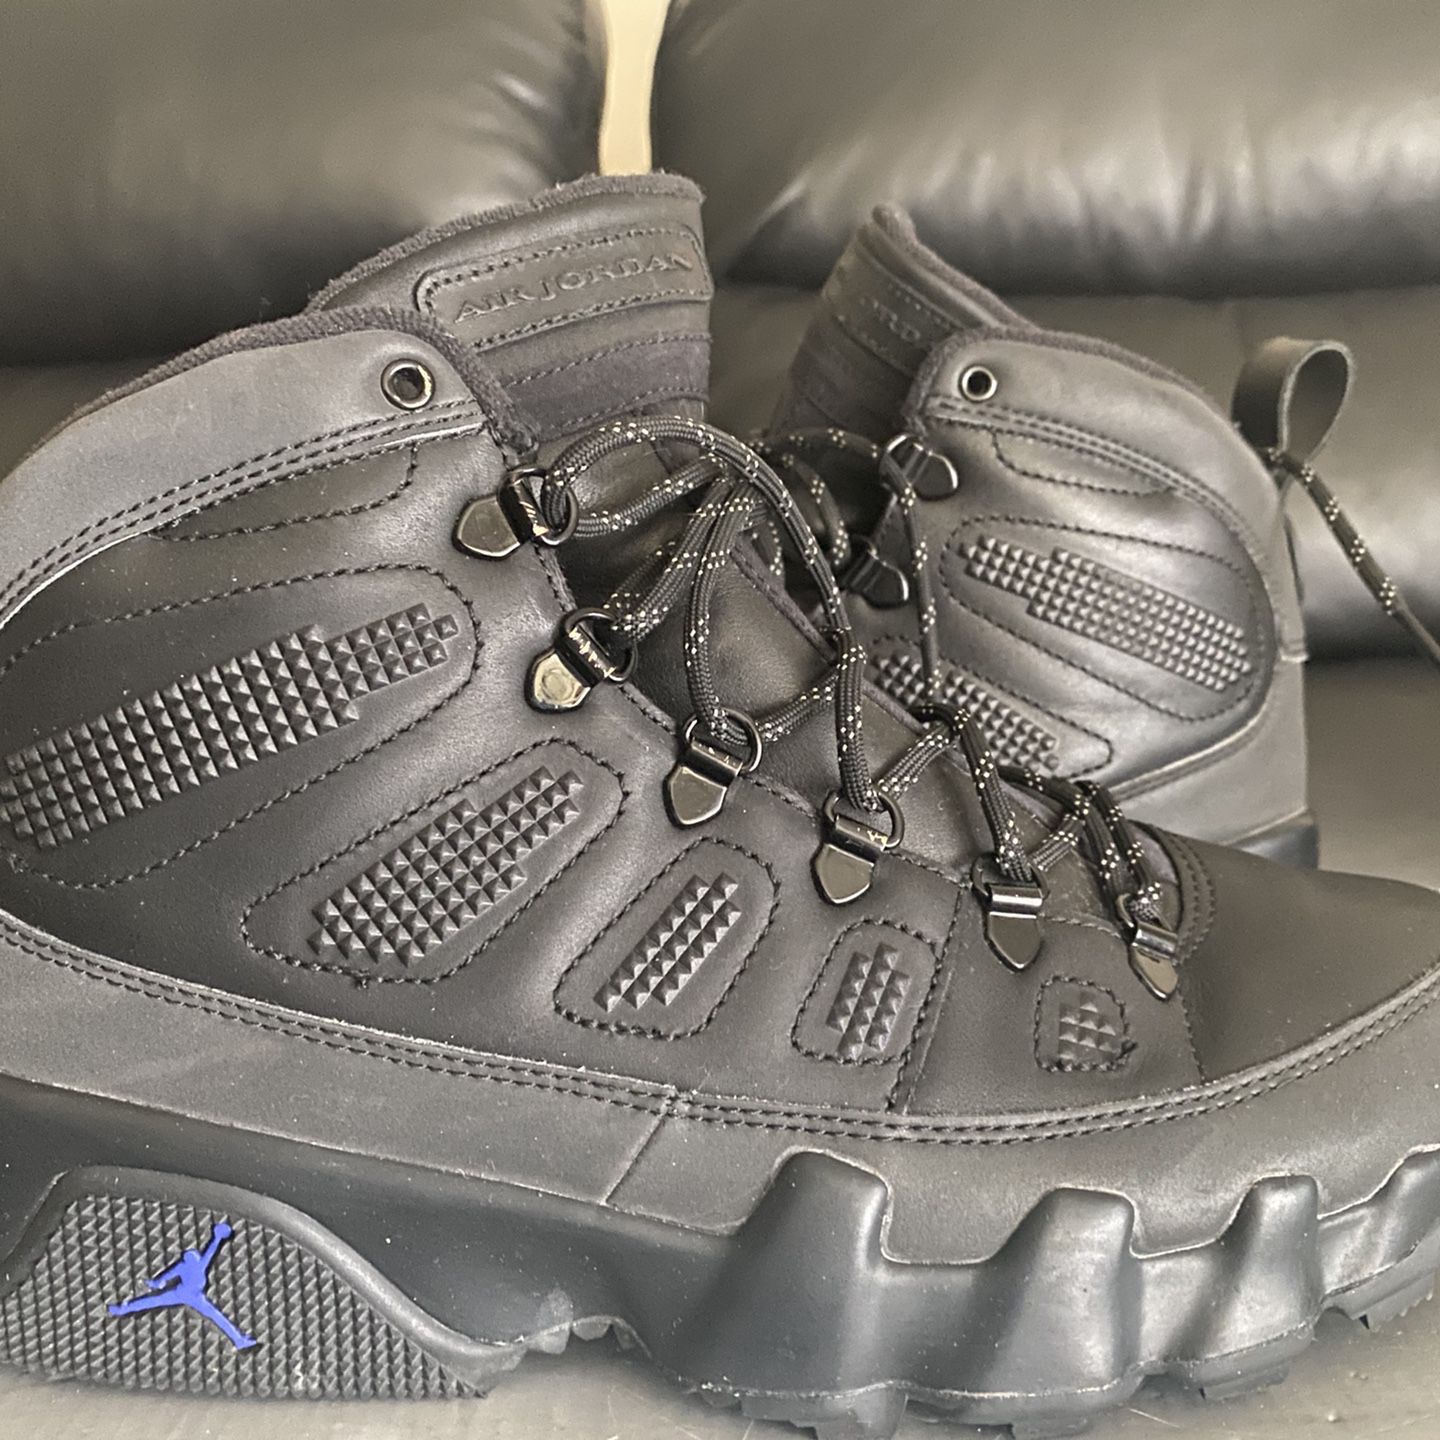 Jordan 9 boot size 9